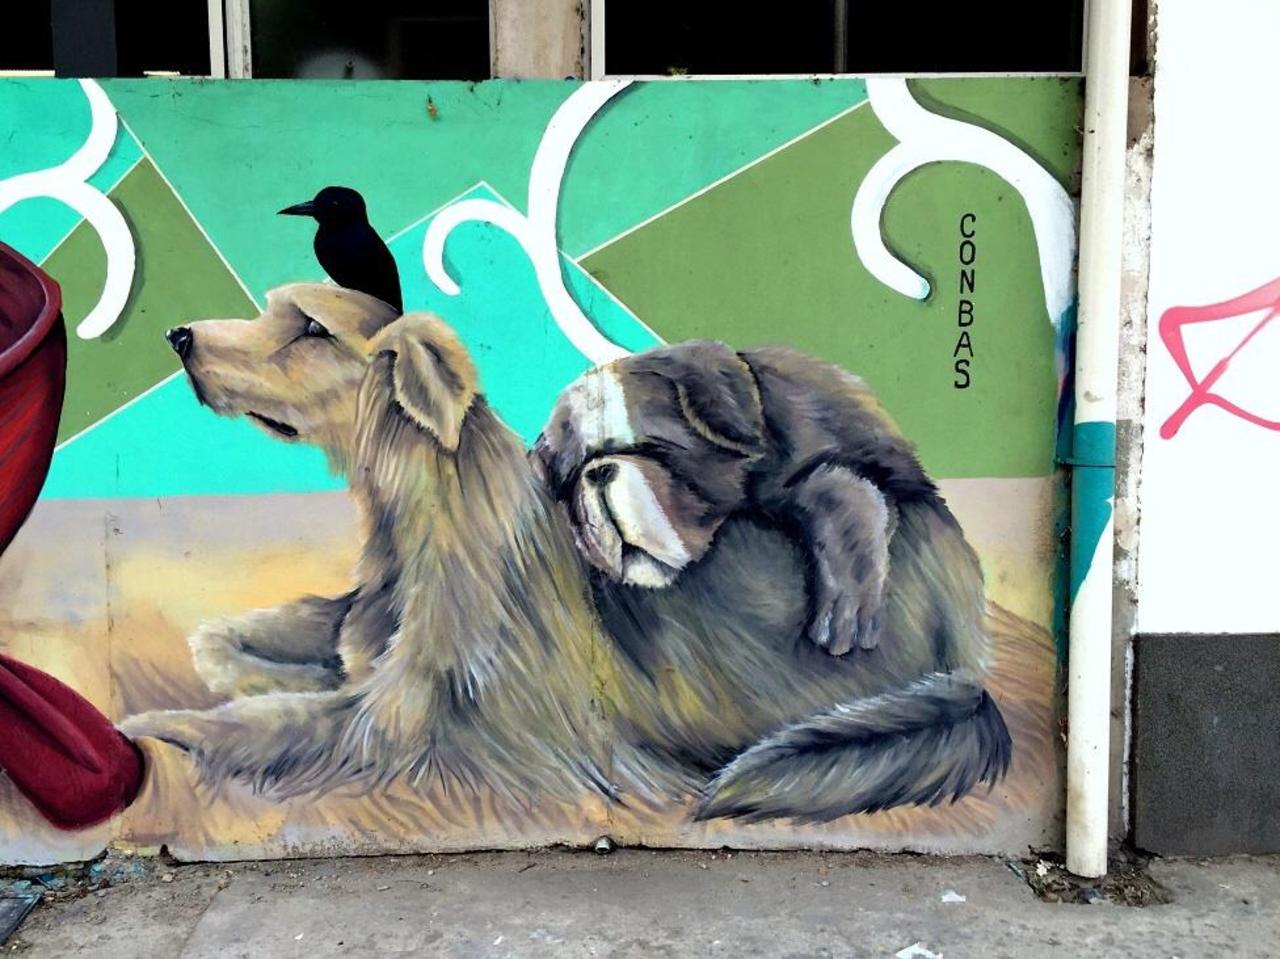 #Graffiti de hoy: <Friends will be friends...> calle 22, 60y61 #LaPlata #Argentina #StreetArt #UrbanArt #ArteUrbano http://t.co/LEv7WvEDmv